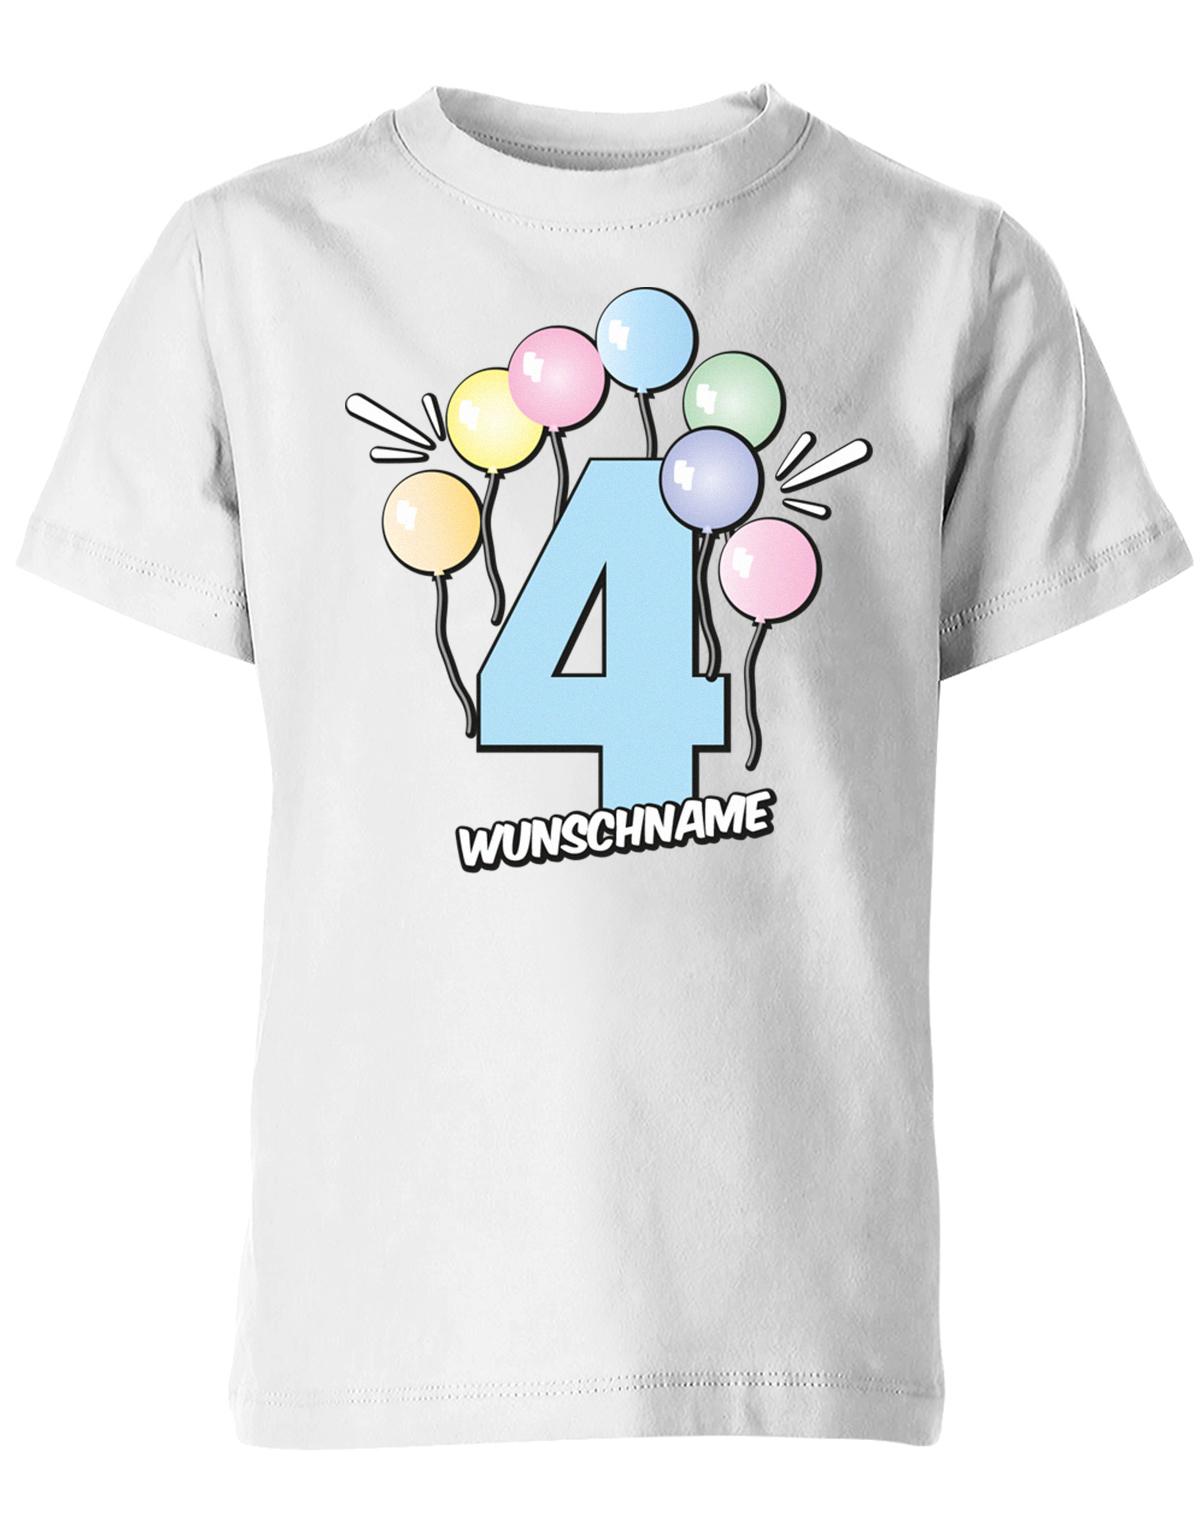 Luftballons-pastell-4-geburtstag-wunschname-kinder-shirt-weiss